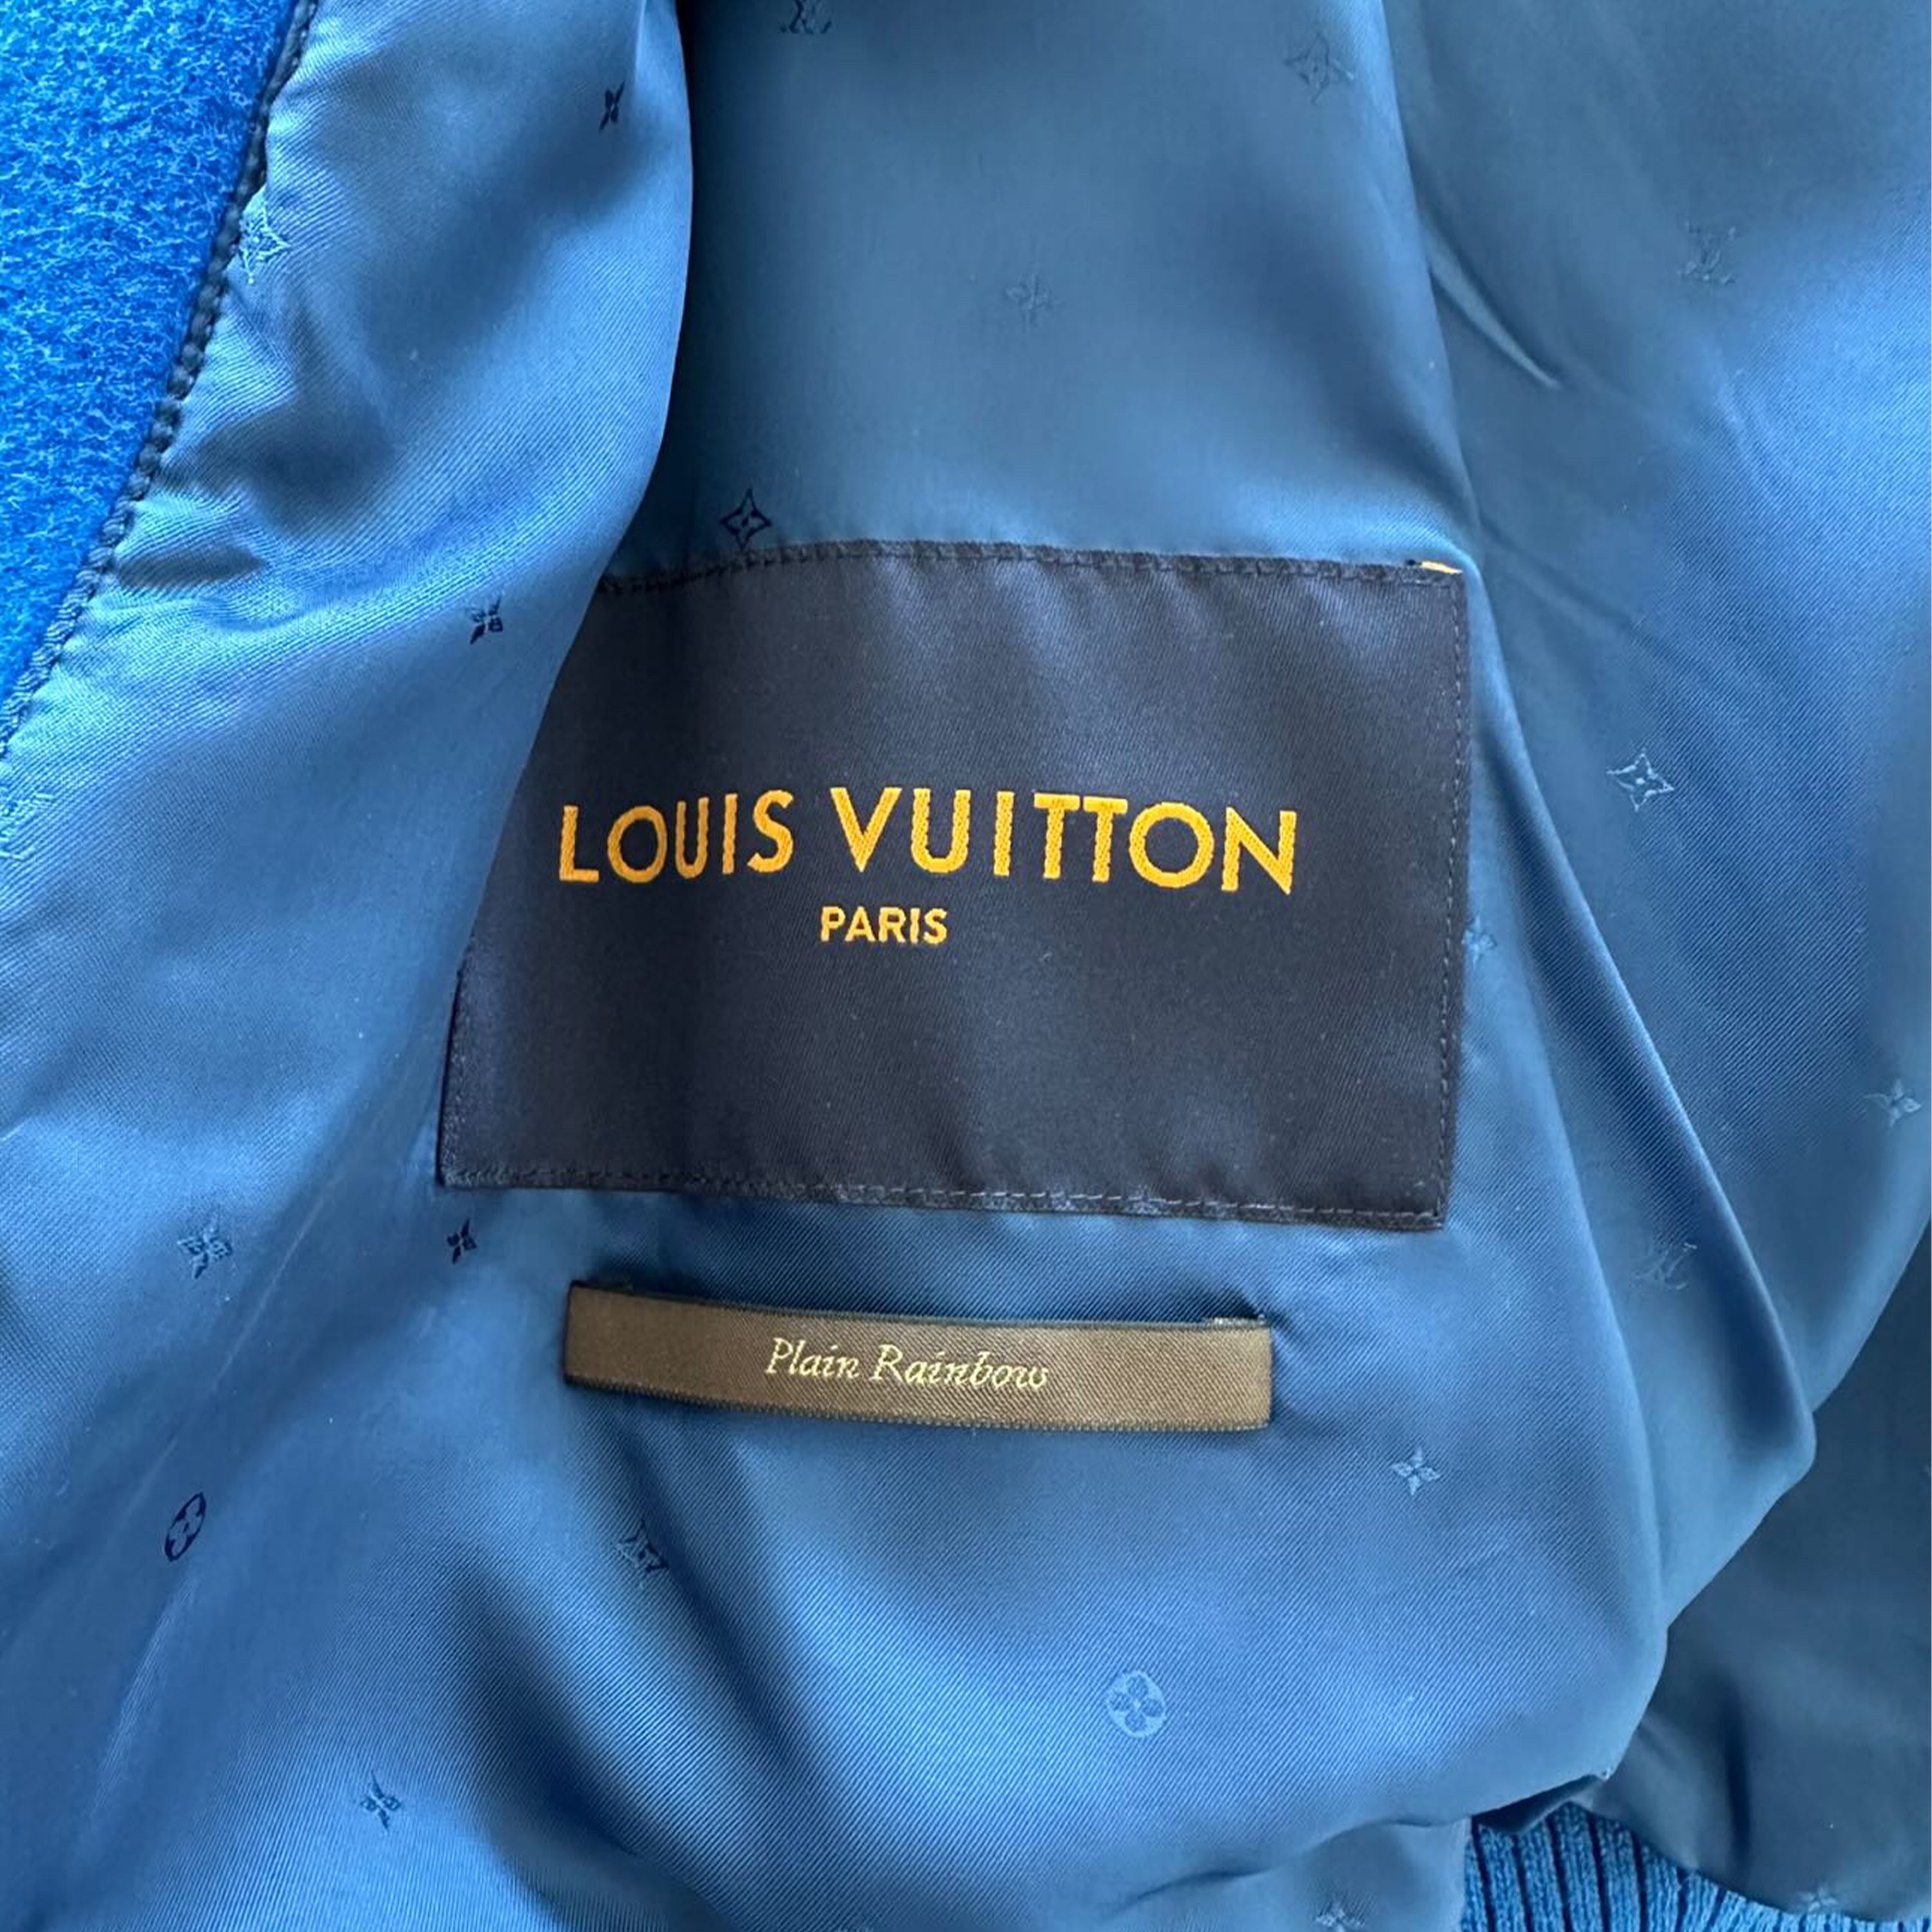 Louis Vuitton 2019 Wizard of Oz “Plain Rainbow” - Depop